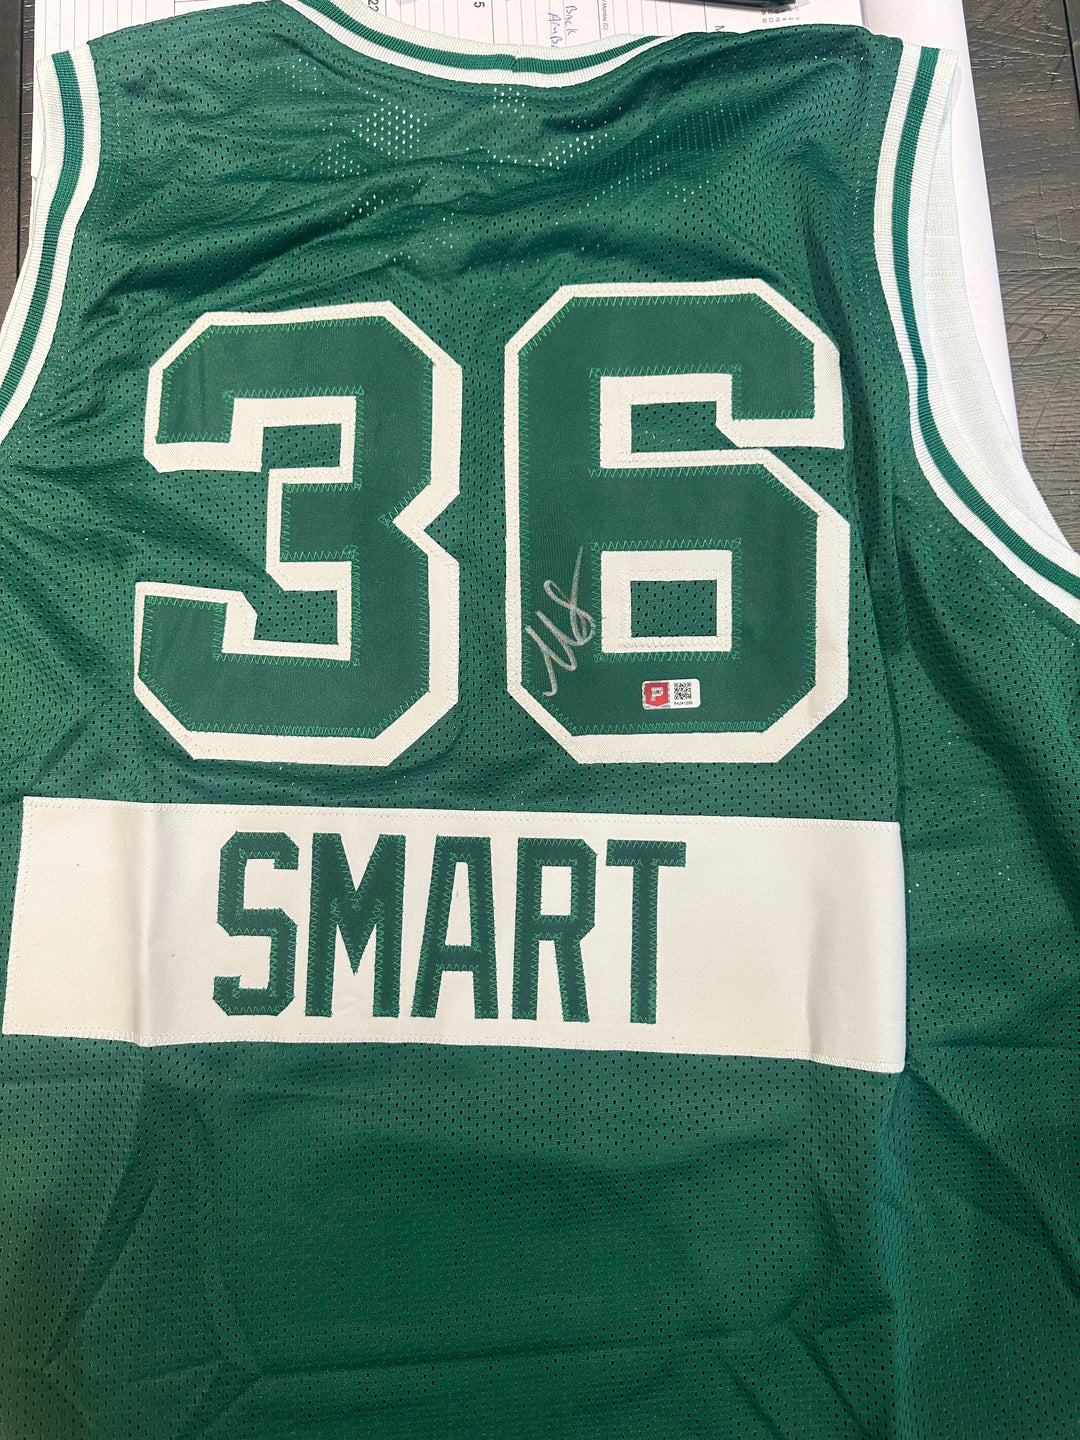 Marcus Smart signed custom Celtics jersey